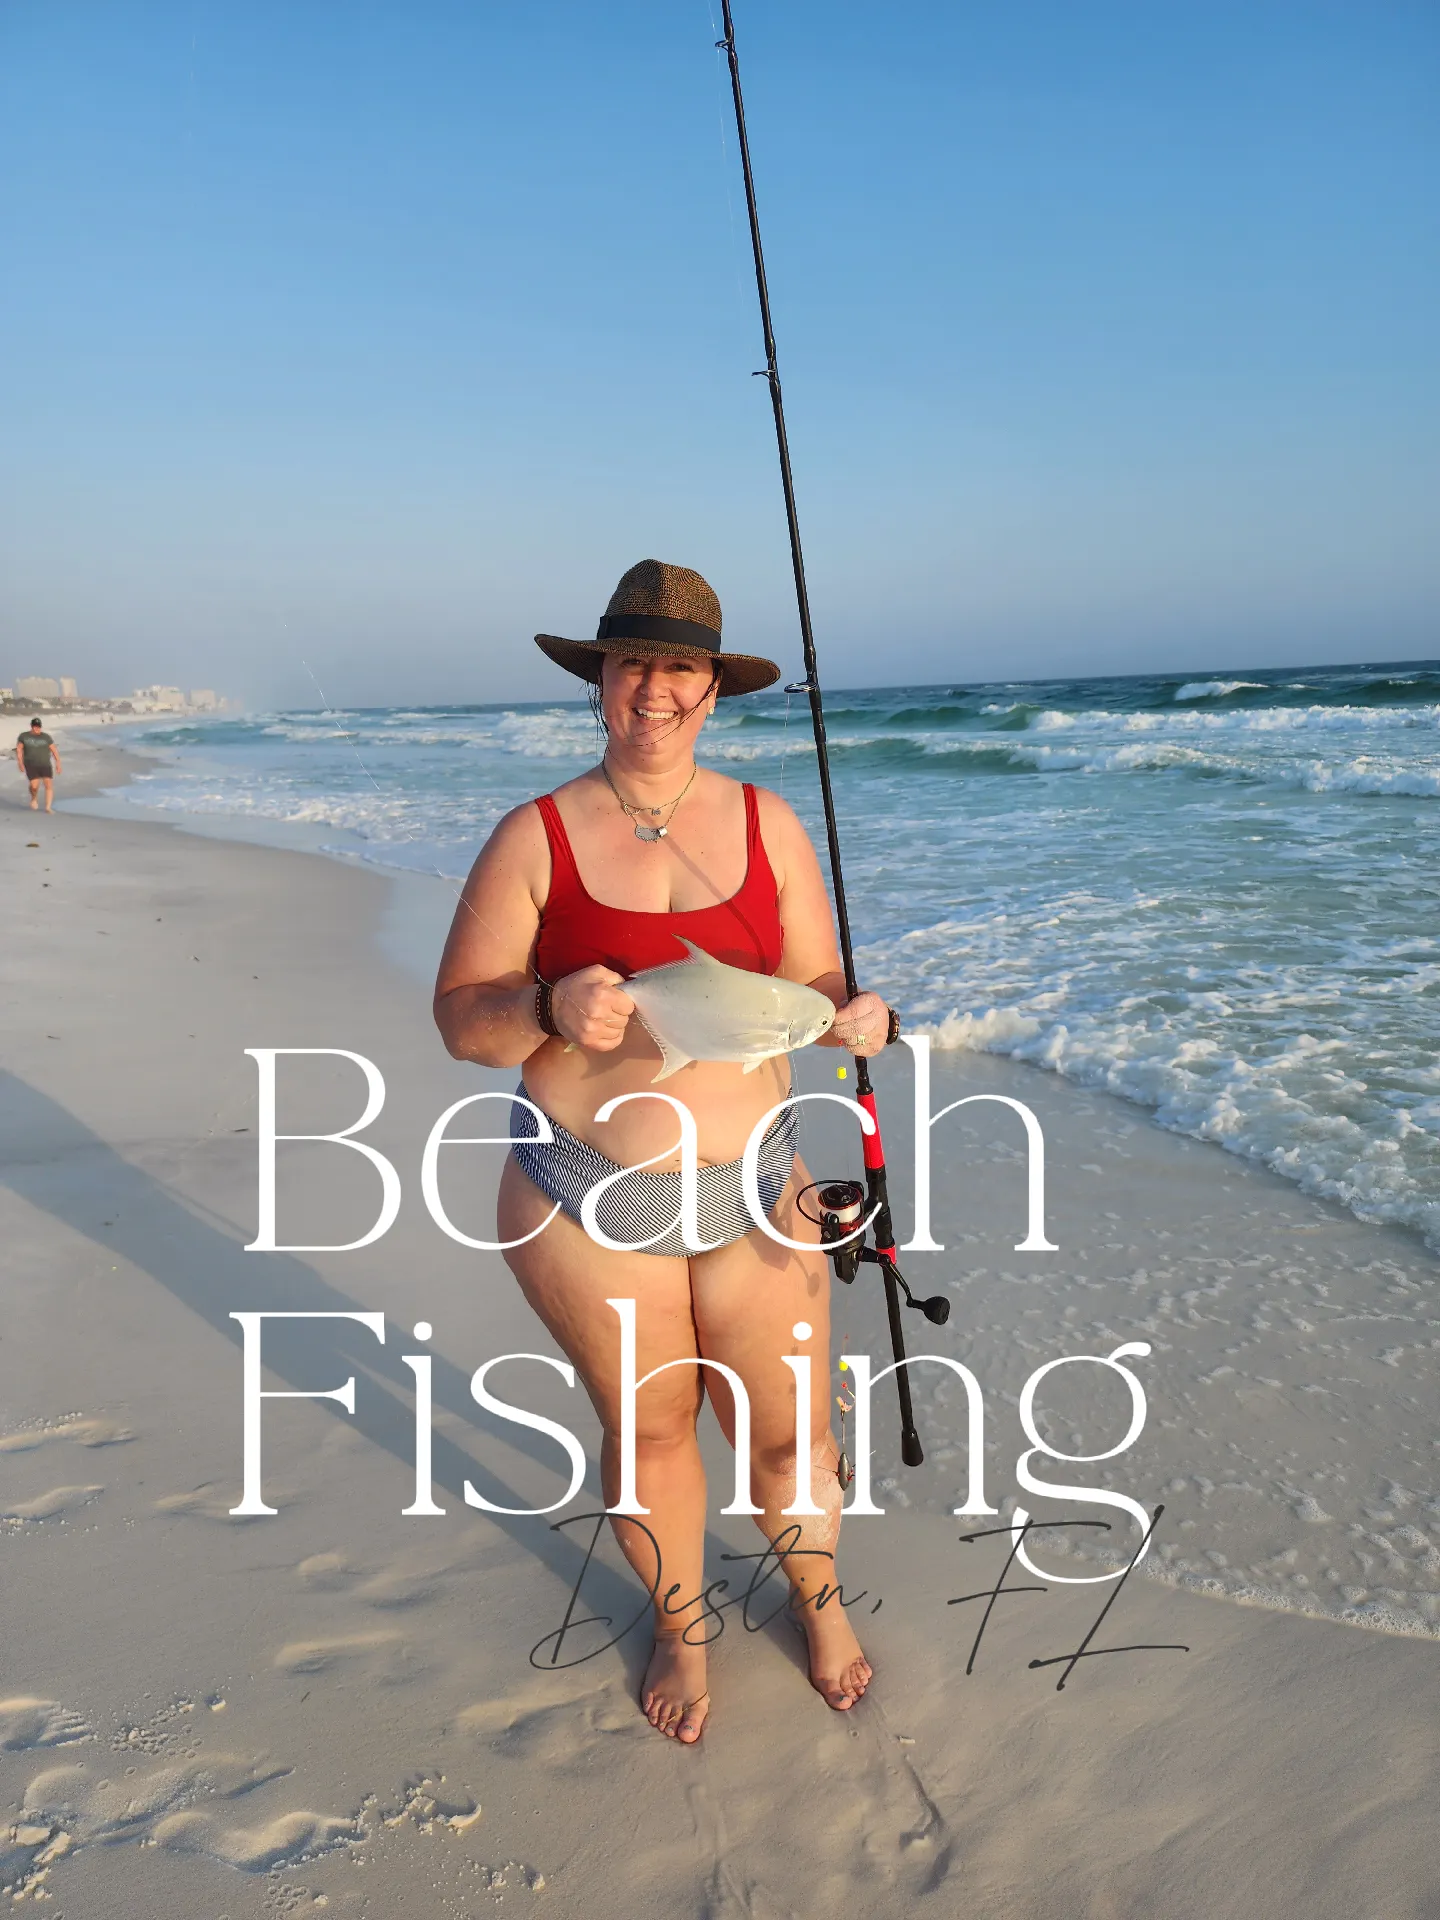 Fishing on the Beach in Destin, Florida